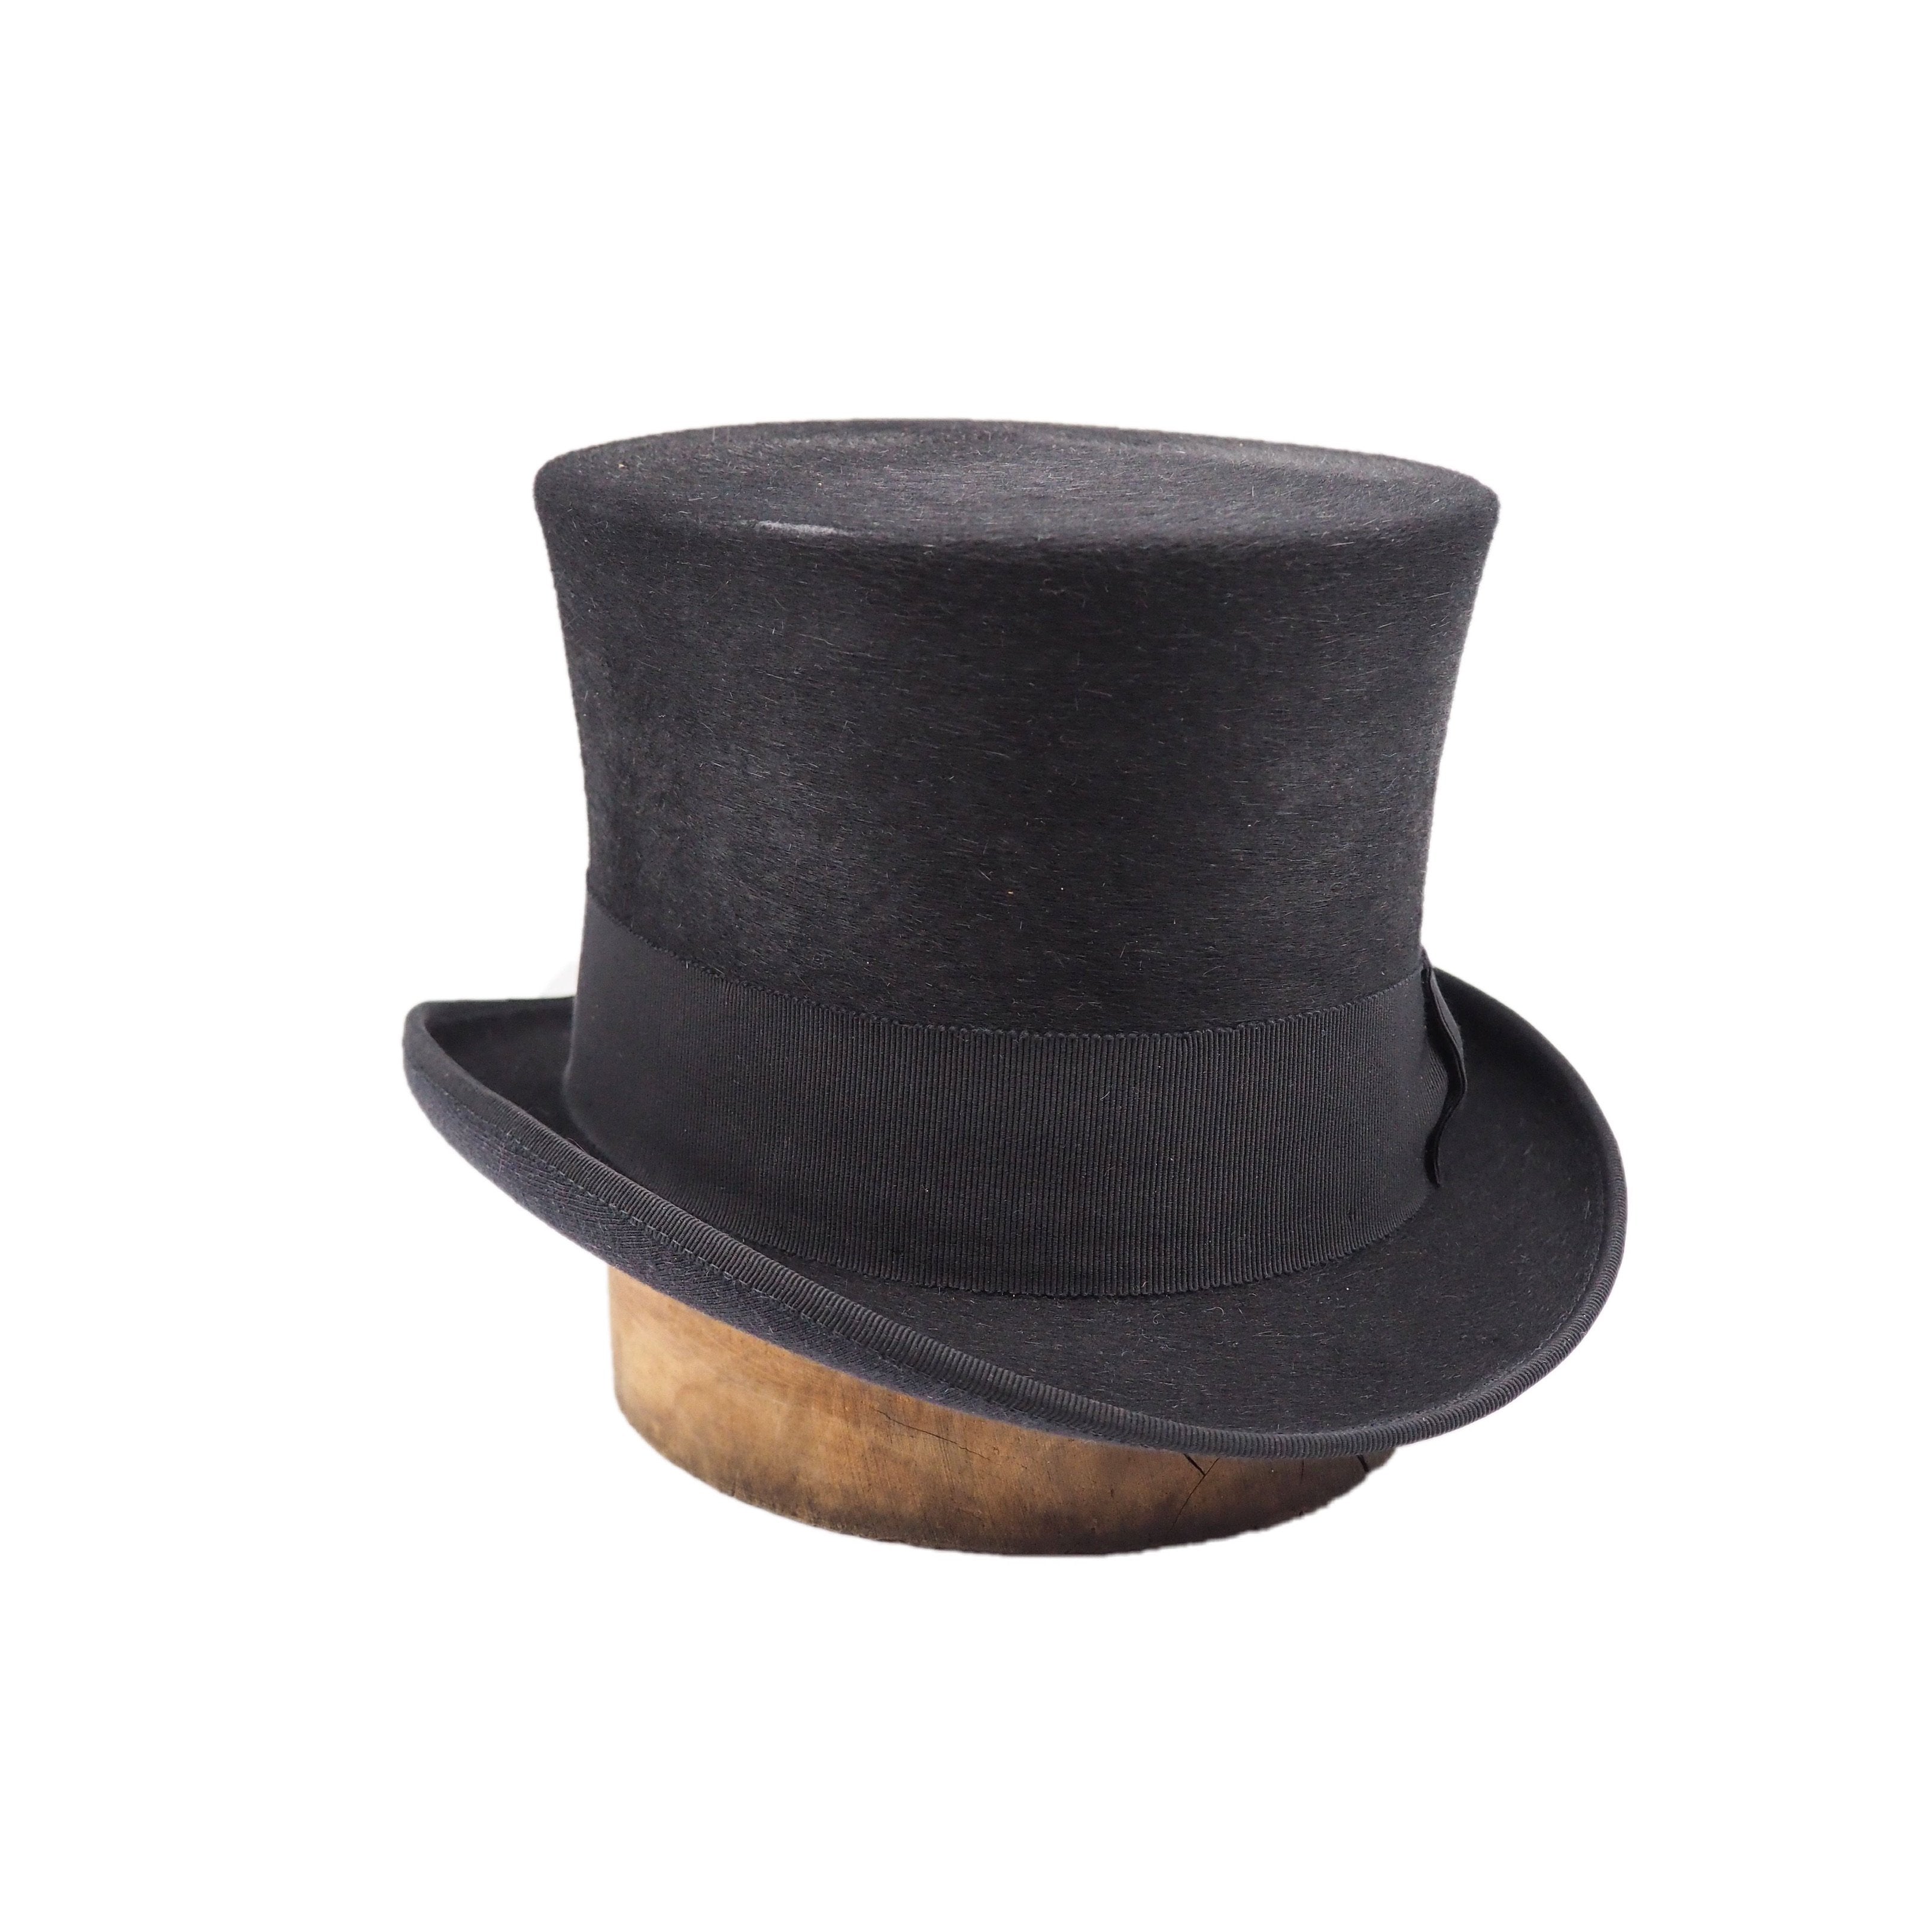 Vintage Top Hat Replica